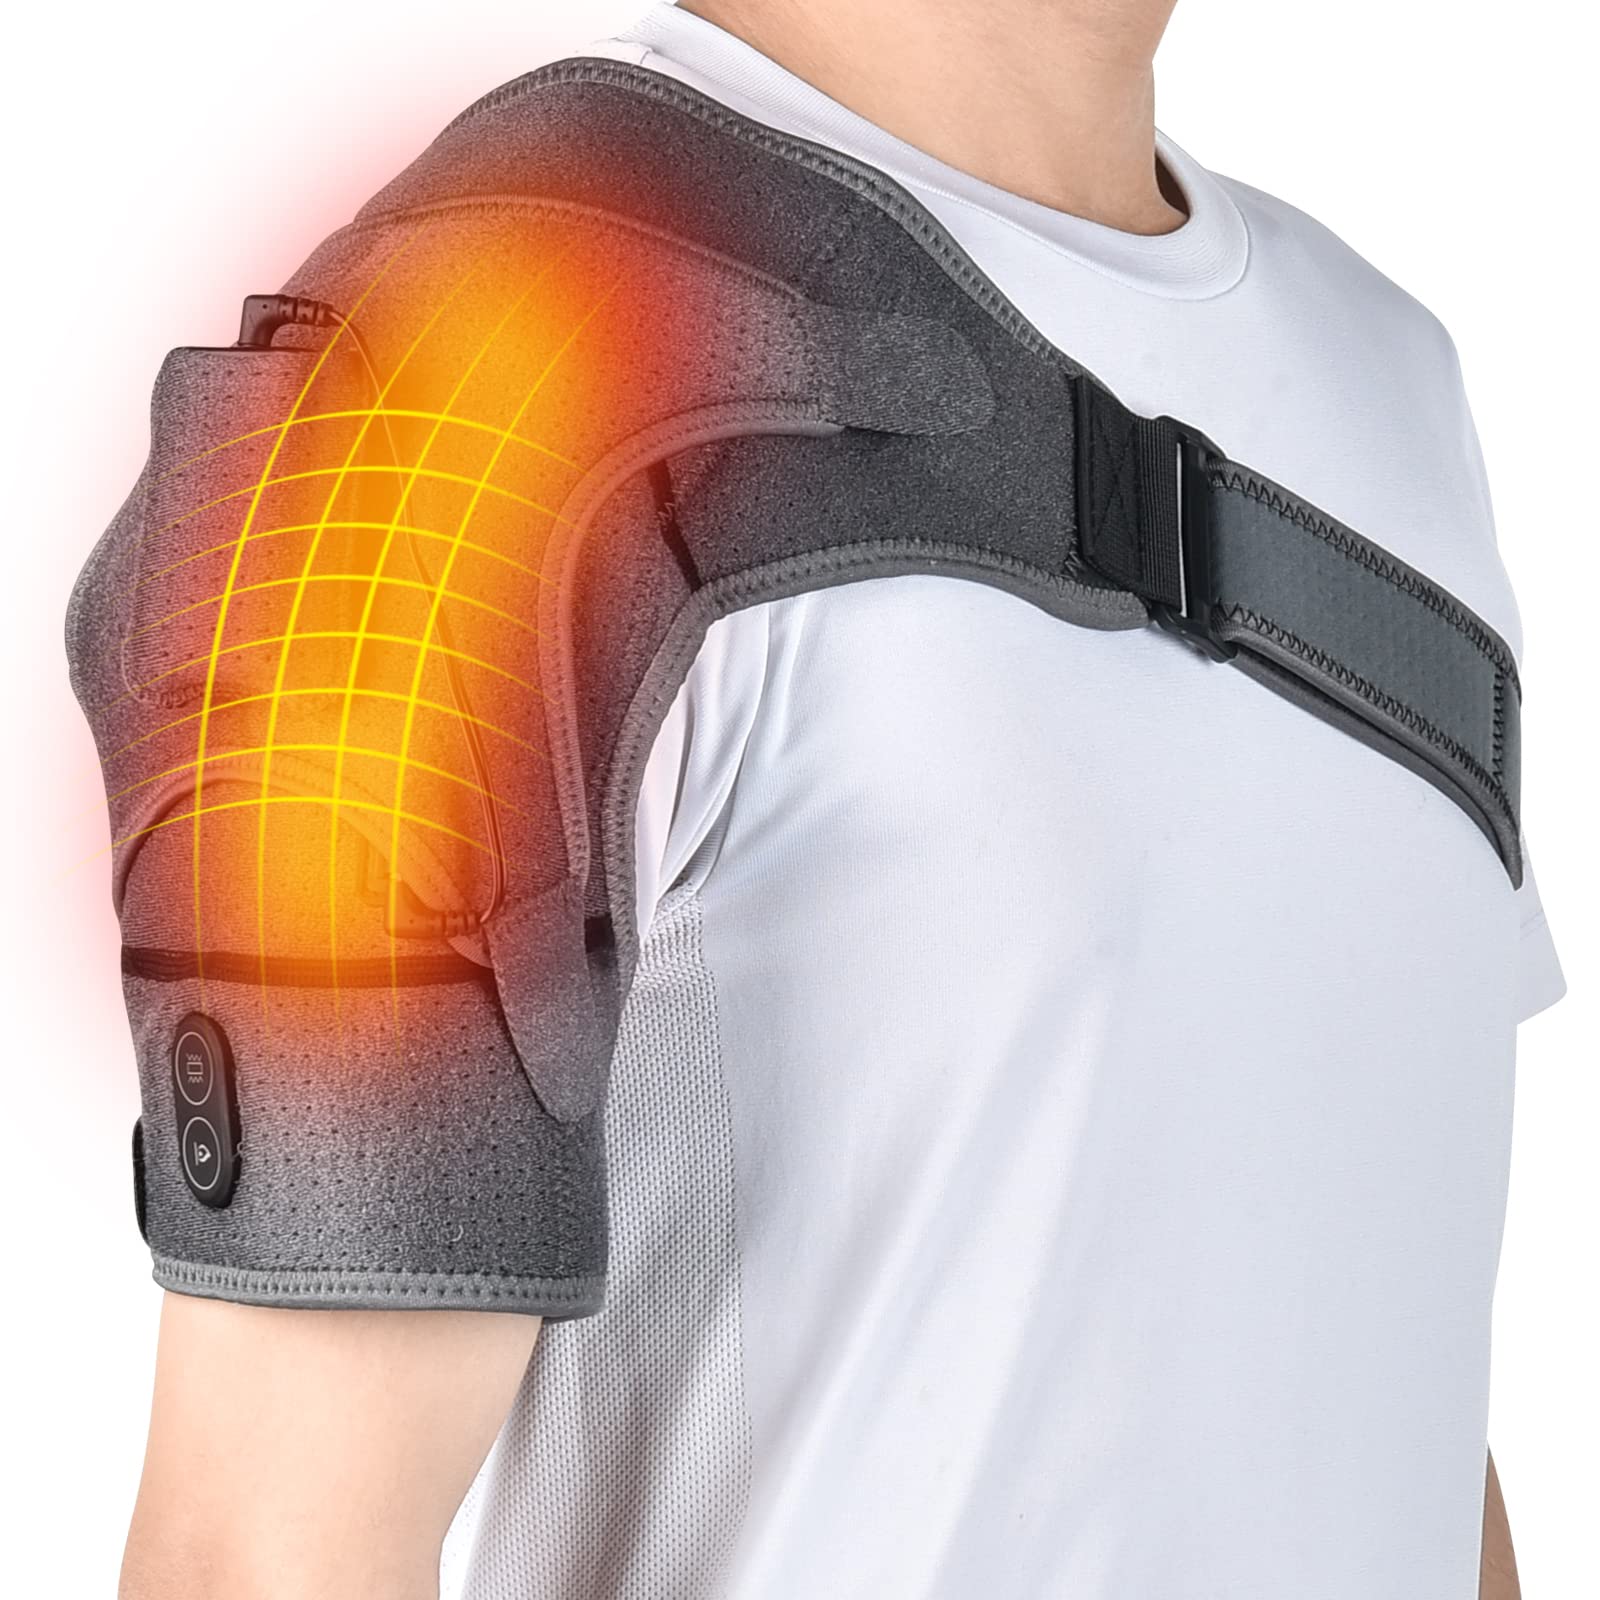 Heated Shoulder Brace Adjustable Heating Shoulder Pad Unisex Heat Therapy Shoulder  Massager Wrap for Frozen Shoulder Pain Relief - AliExpress